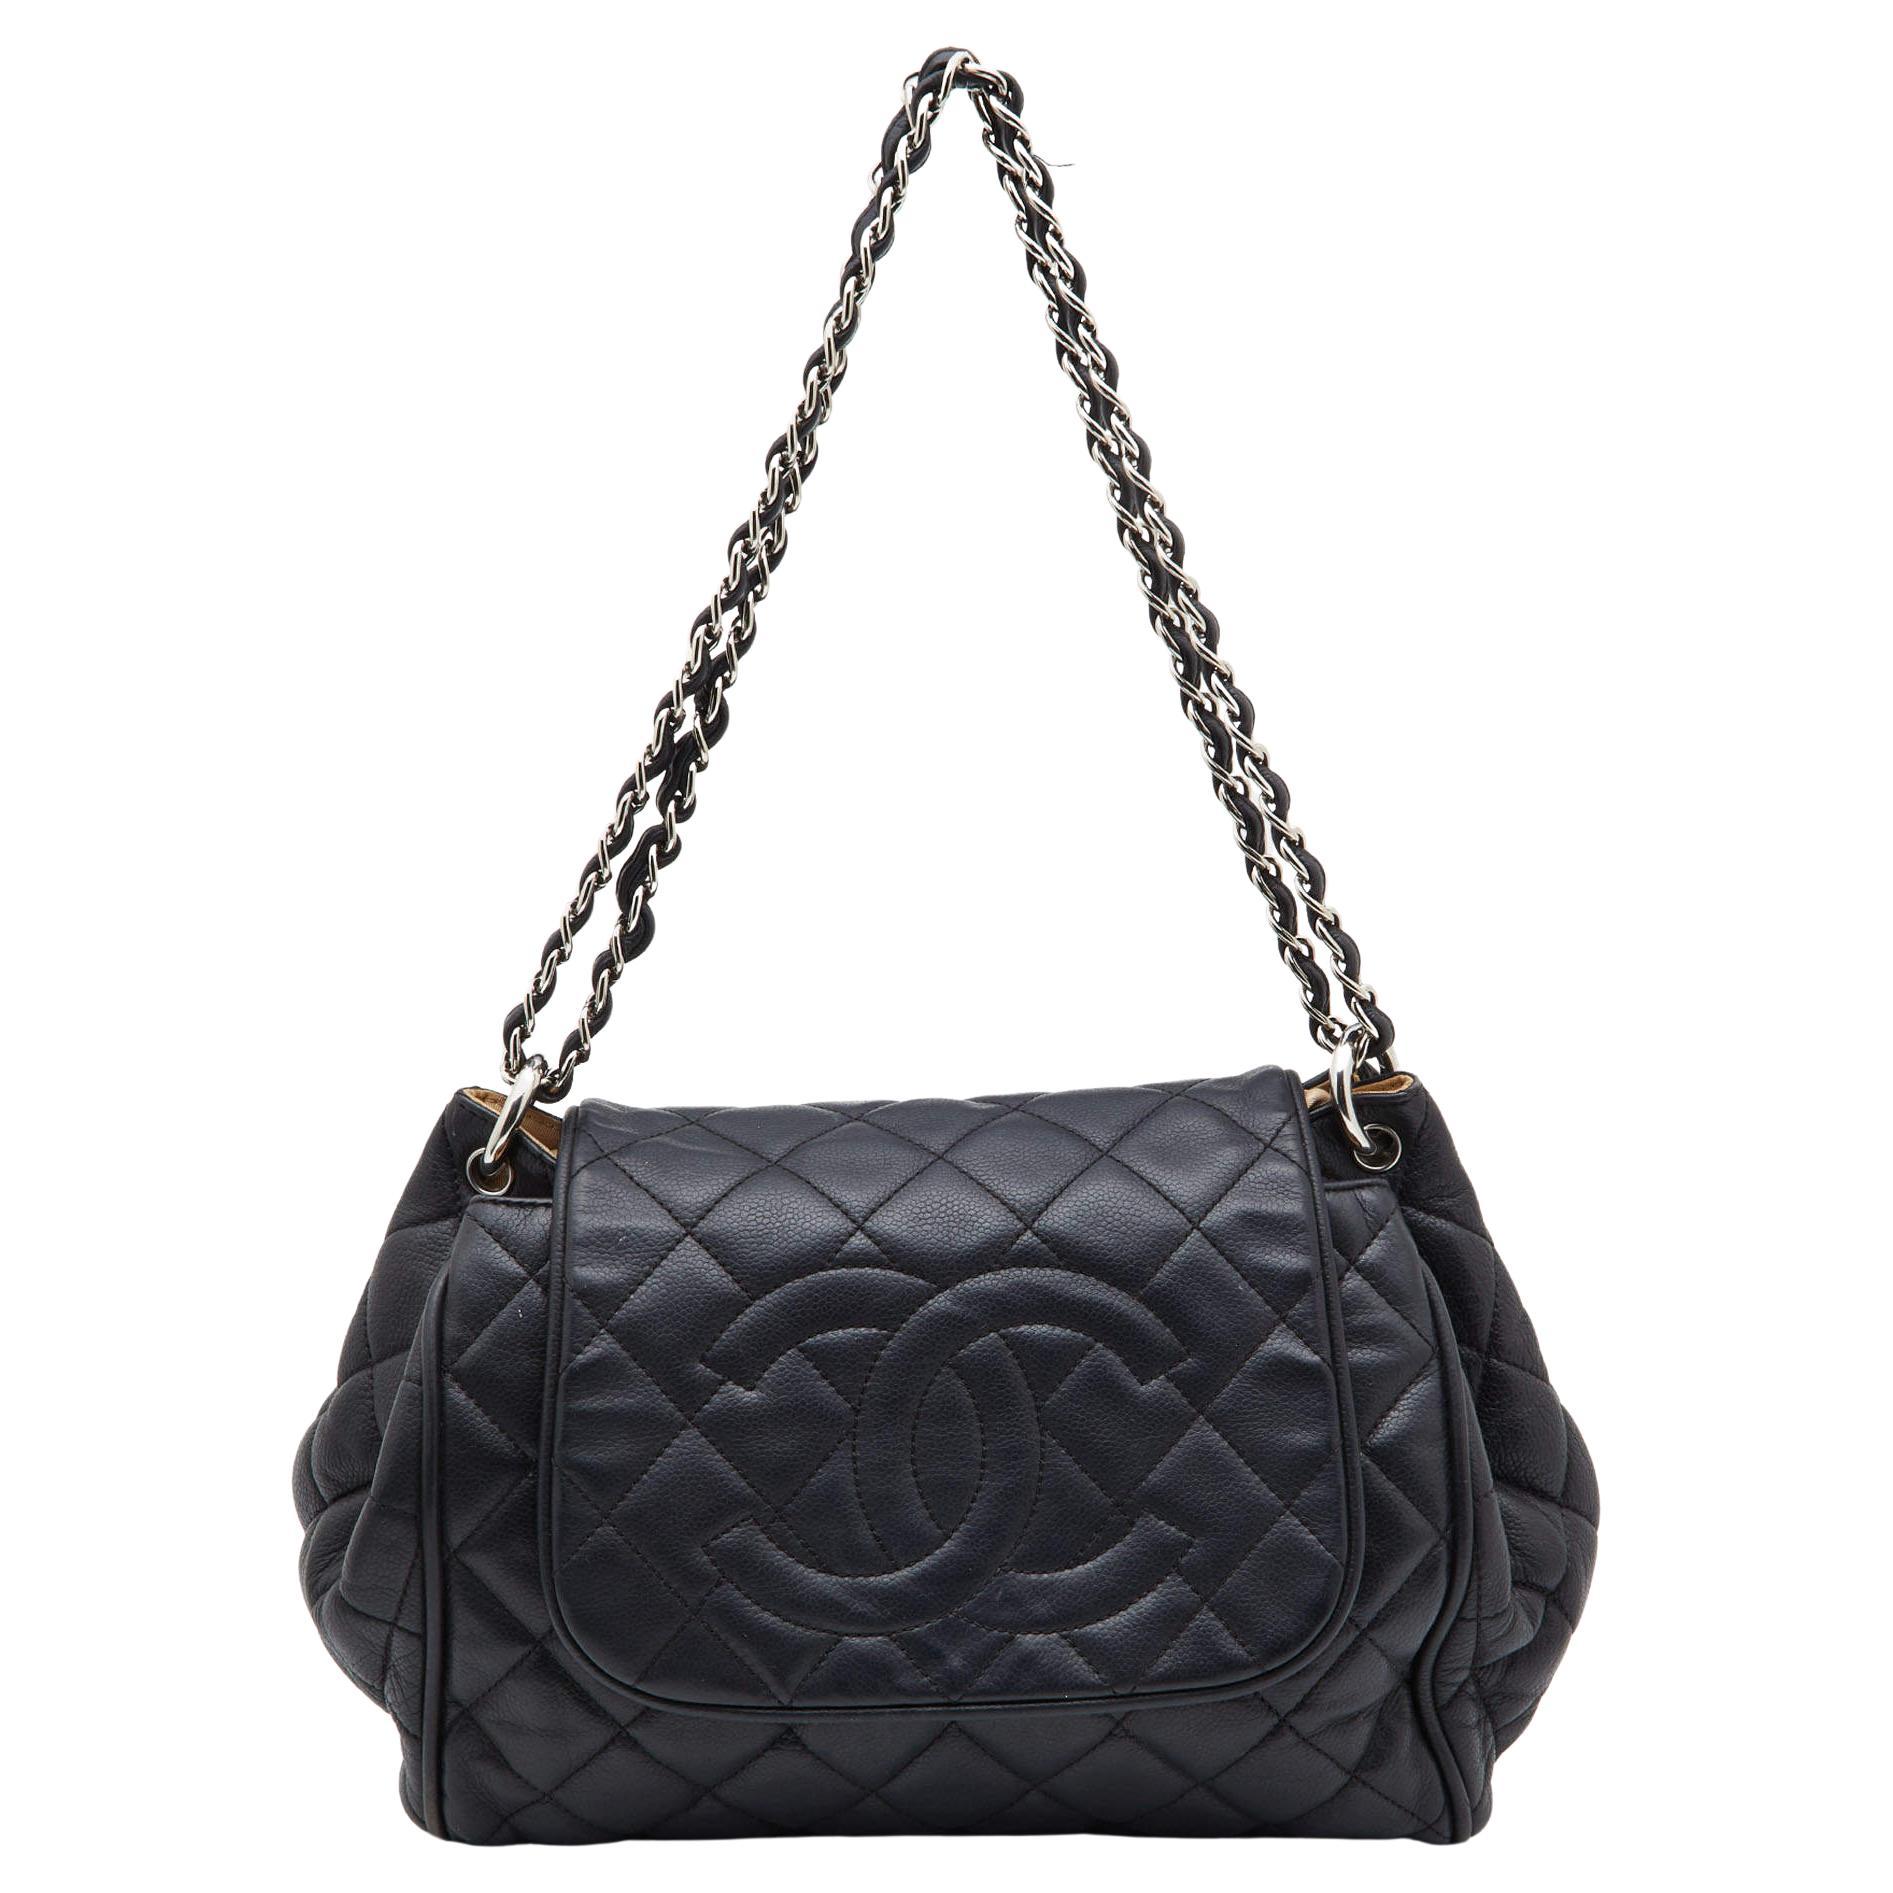 Chanel Black Leather CC Accordion Flap Shoulder Bag